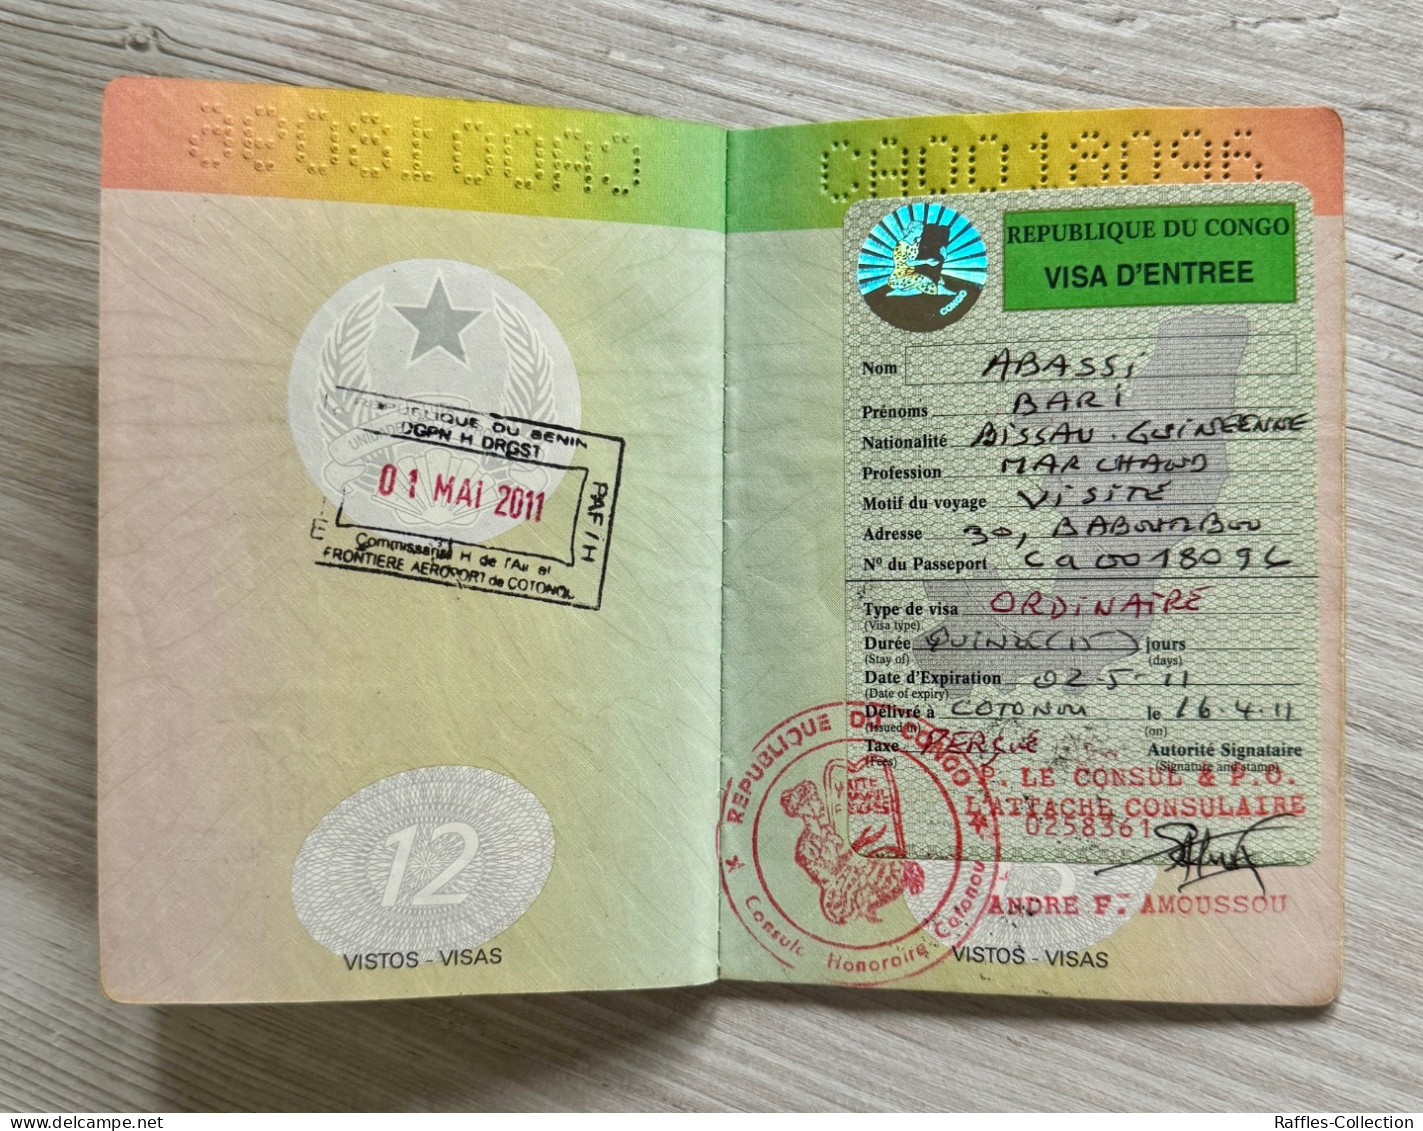 Guinea-Bissau passport passeport reisepass pasaporte passaporto